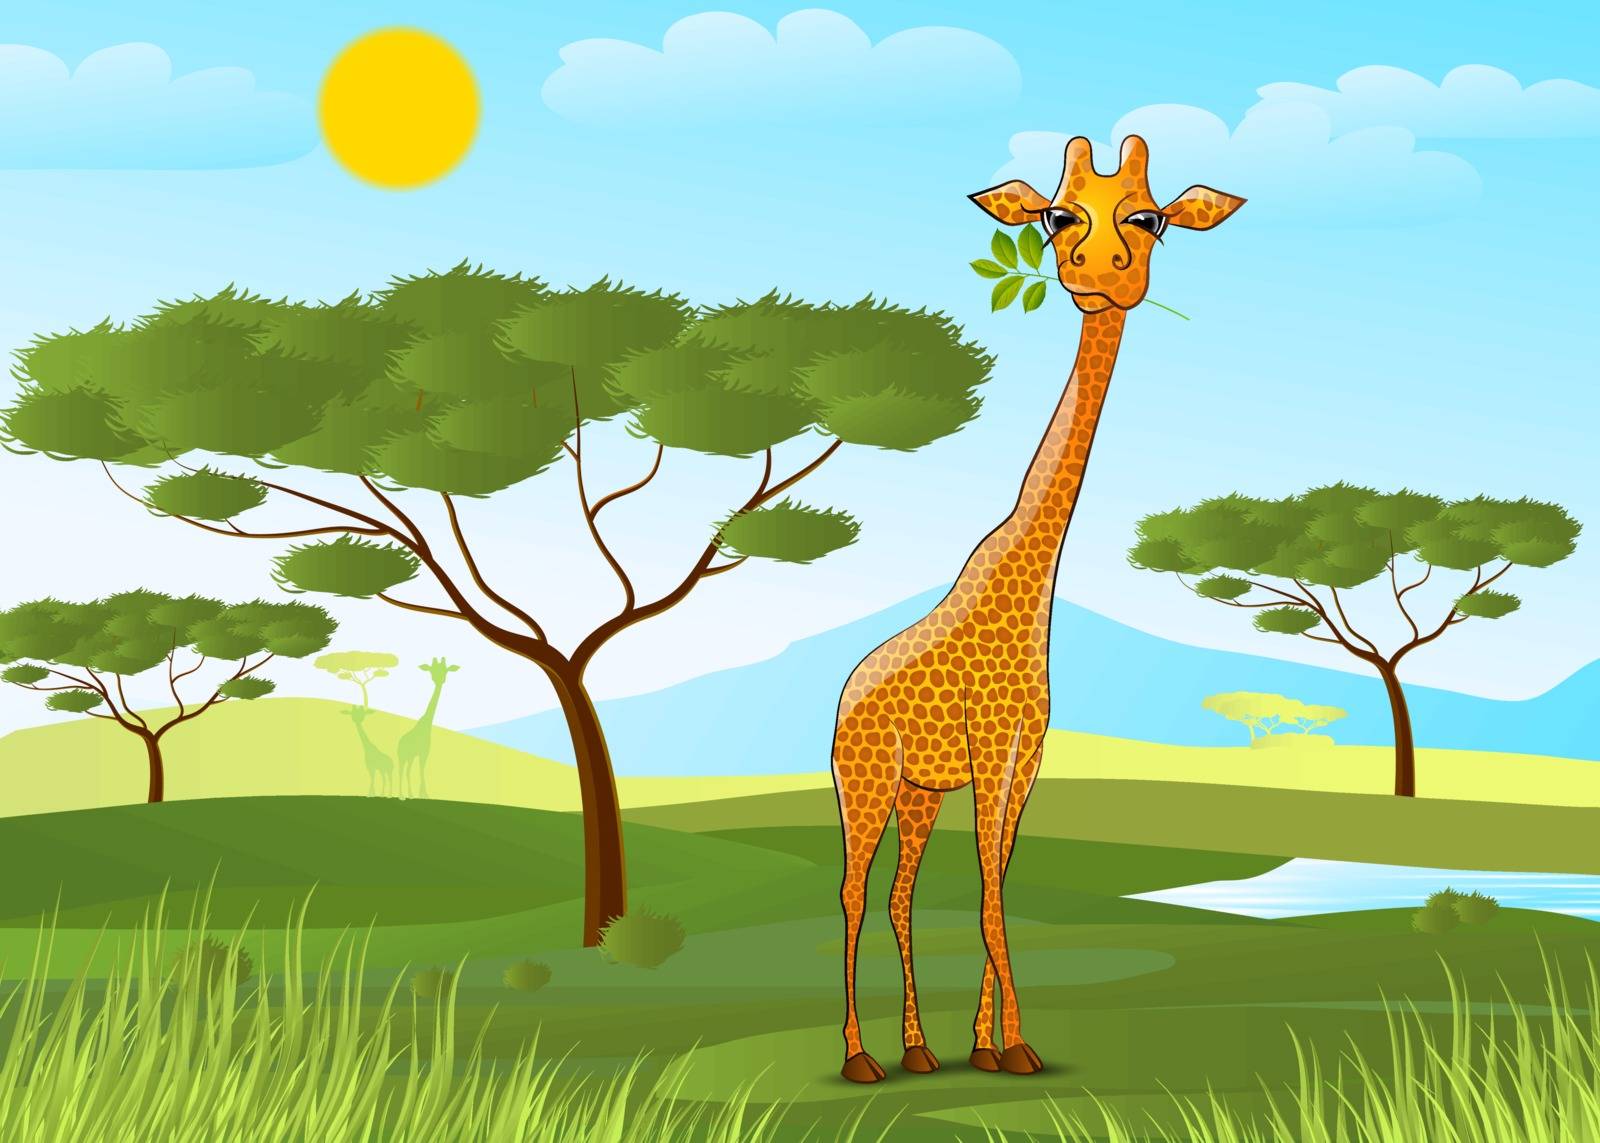 Giraffe eating leaves in Africa at sunset by moleks